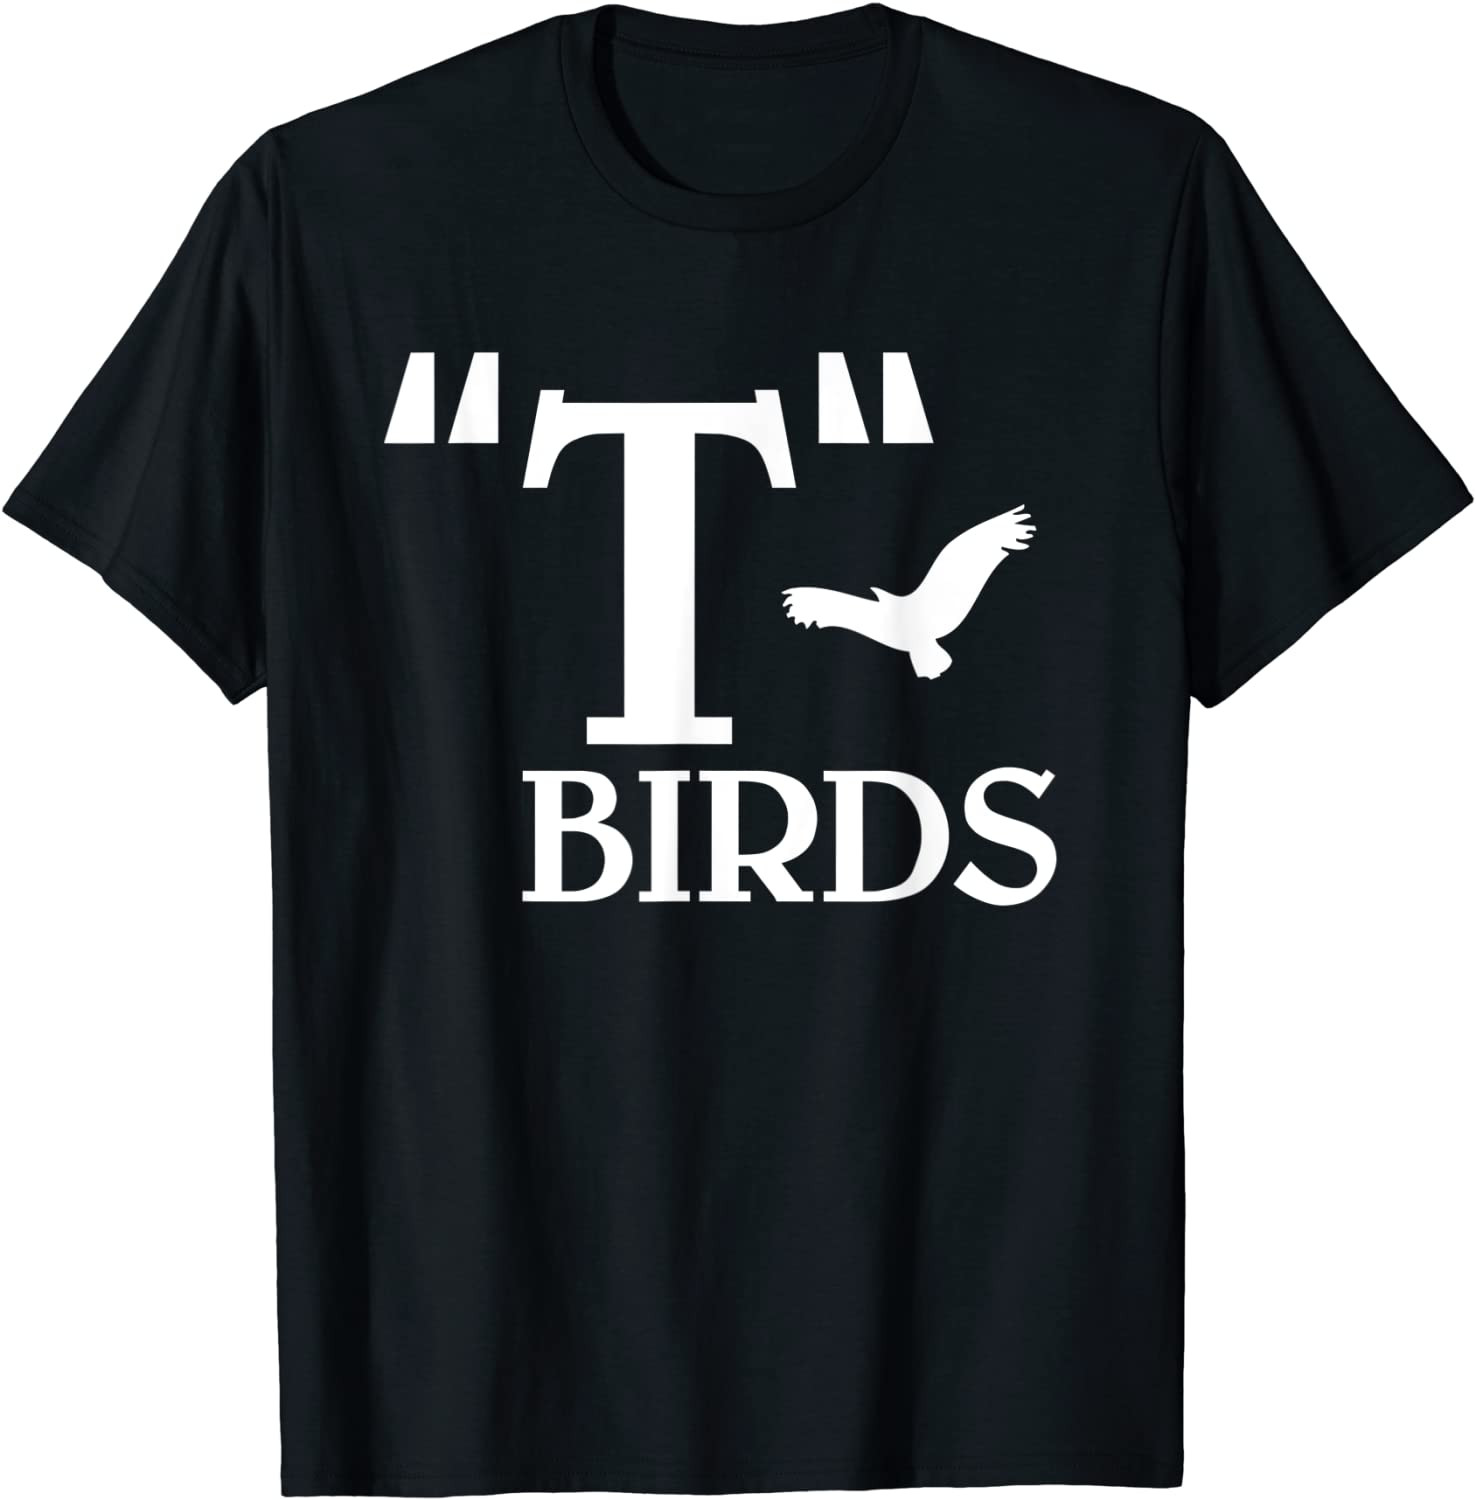 T-Birds Movie Themed T-Shirt